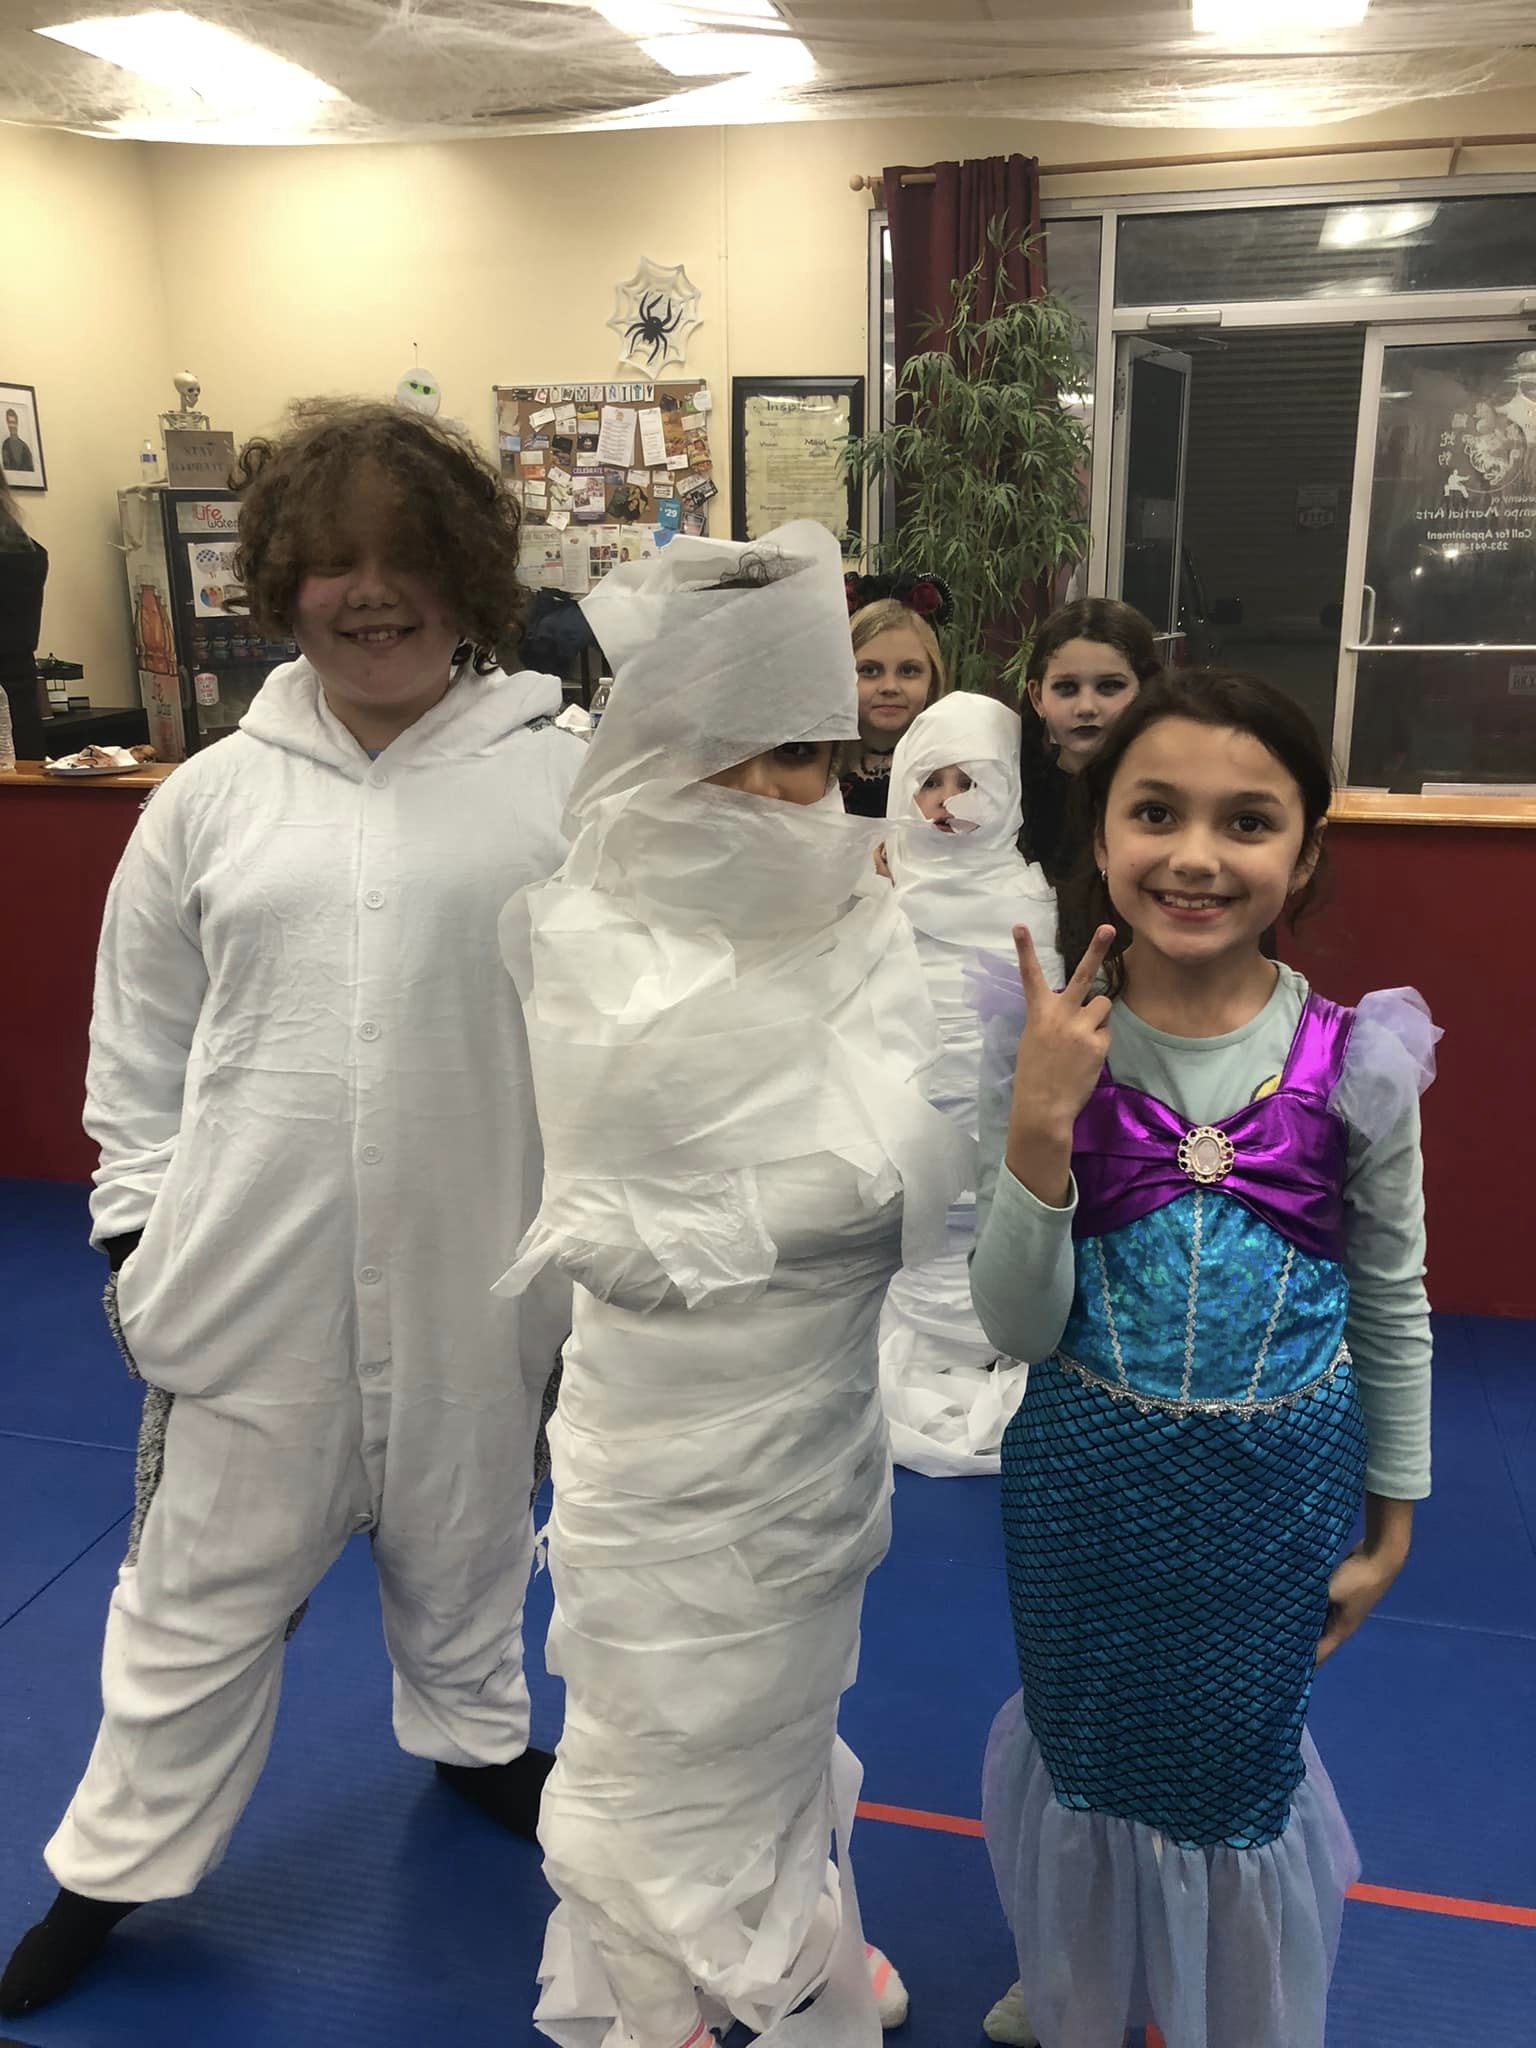 Kids in costumes celebrating at Bellevue Martial Arts School's Halloween party.